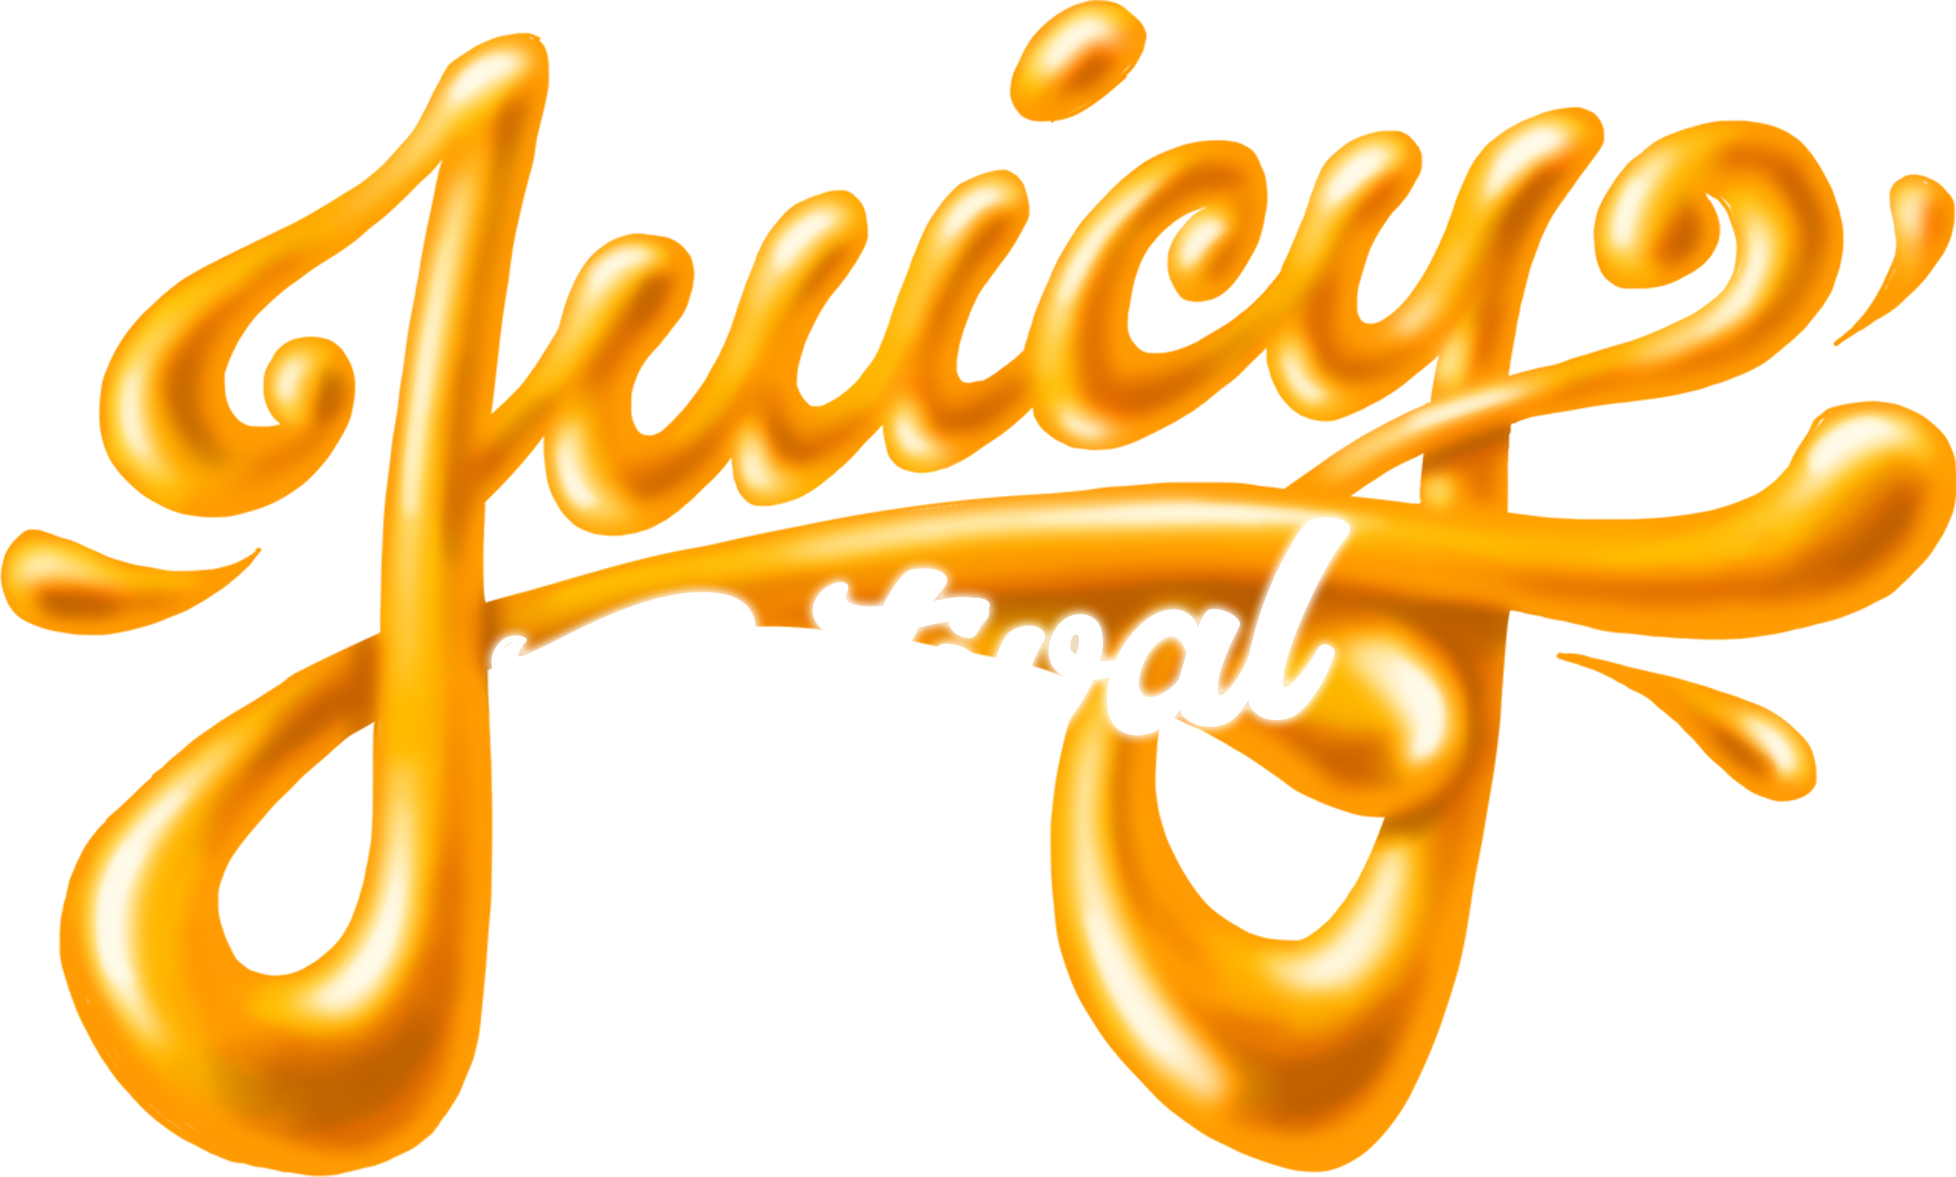 Juicy Festival